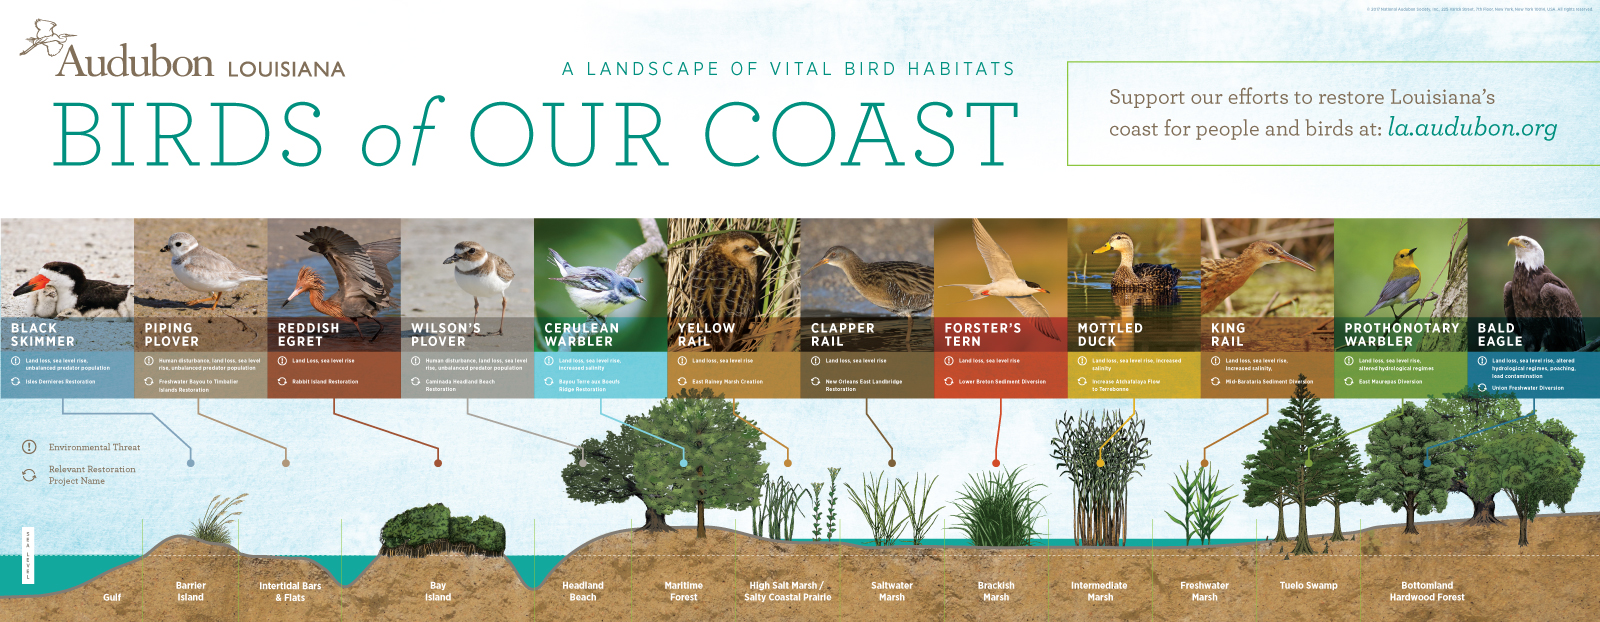 Audubon Birds of our Coast Infographic - Deep Fried